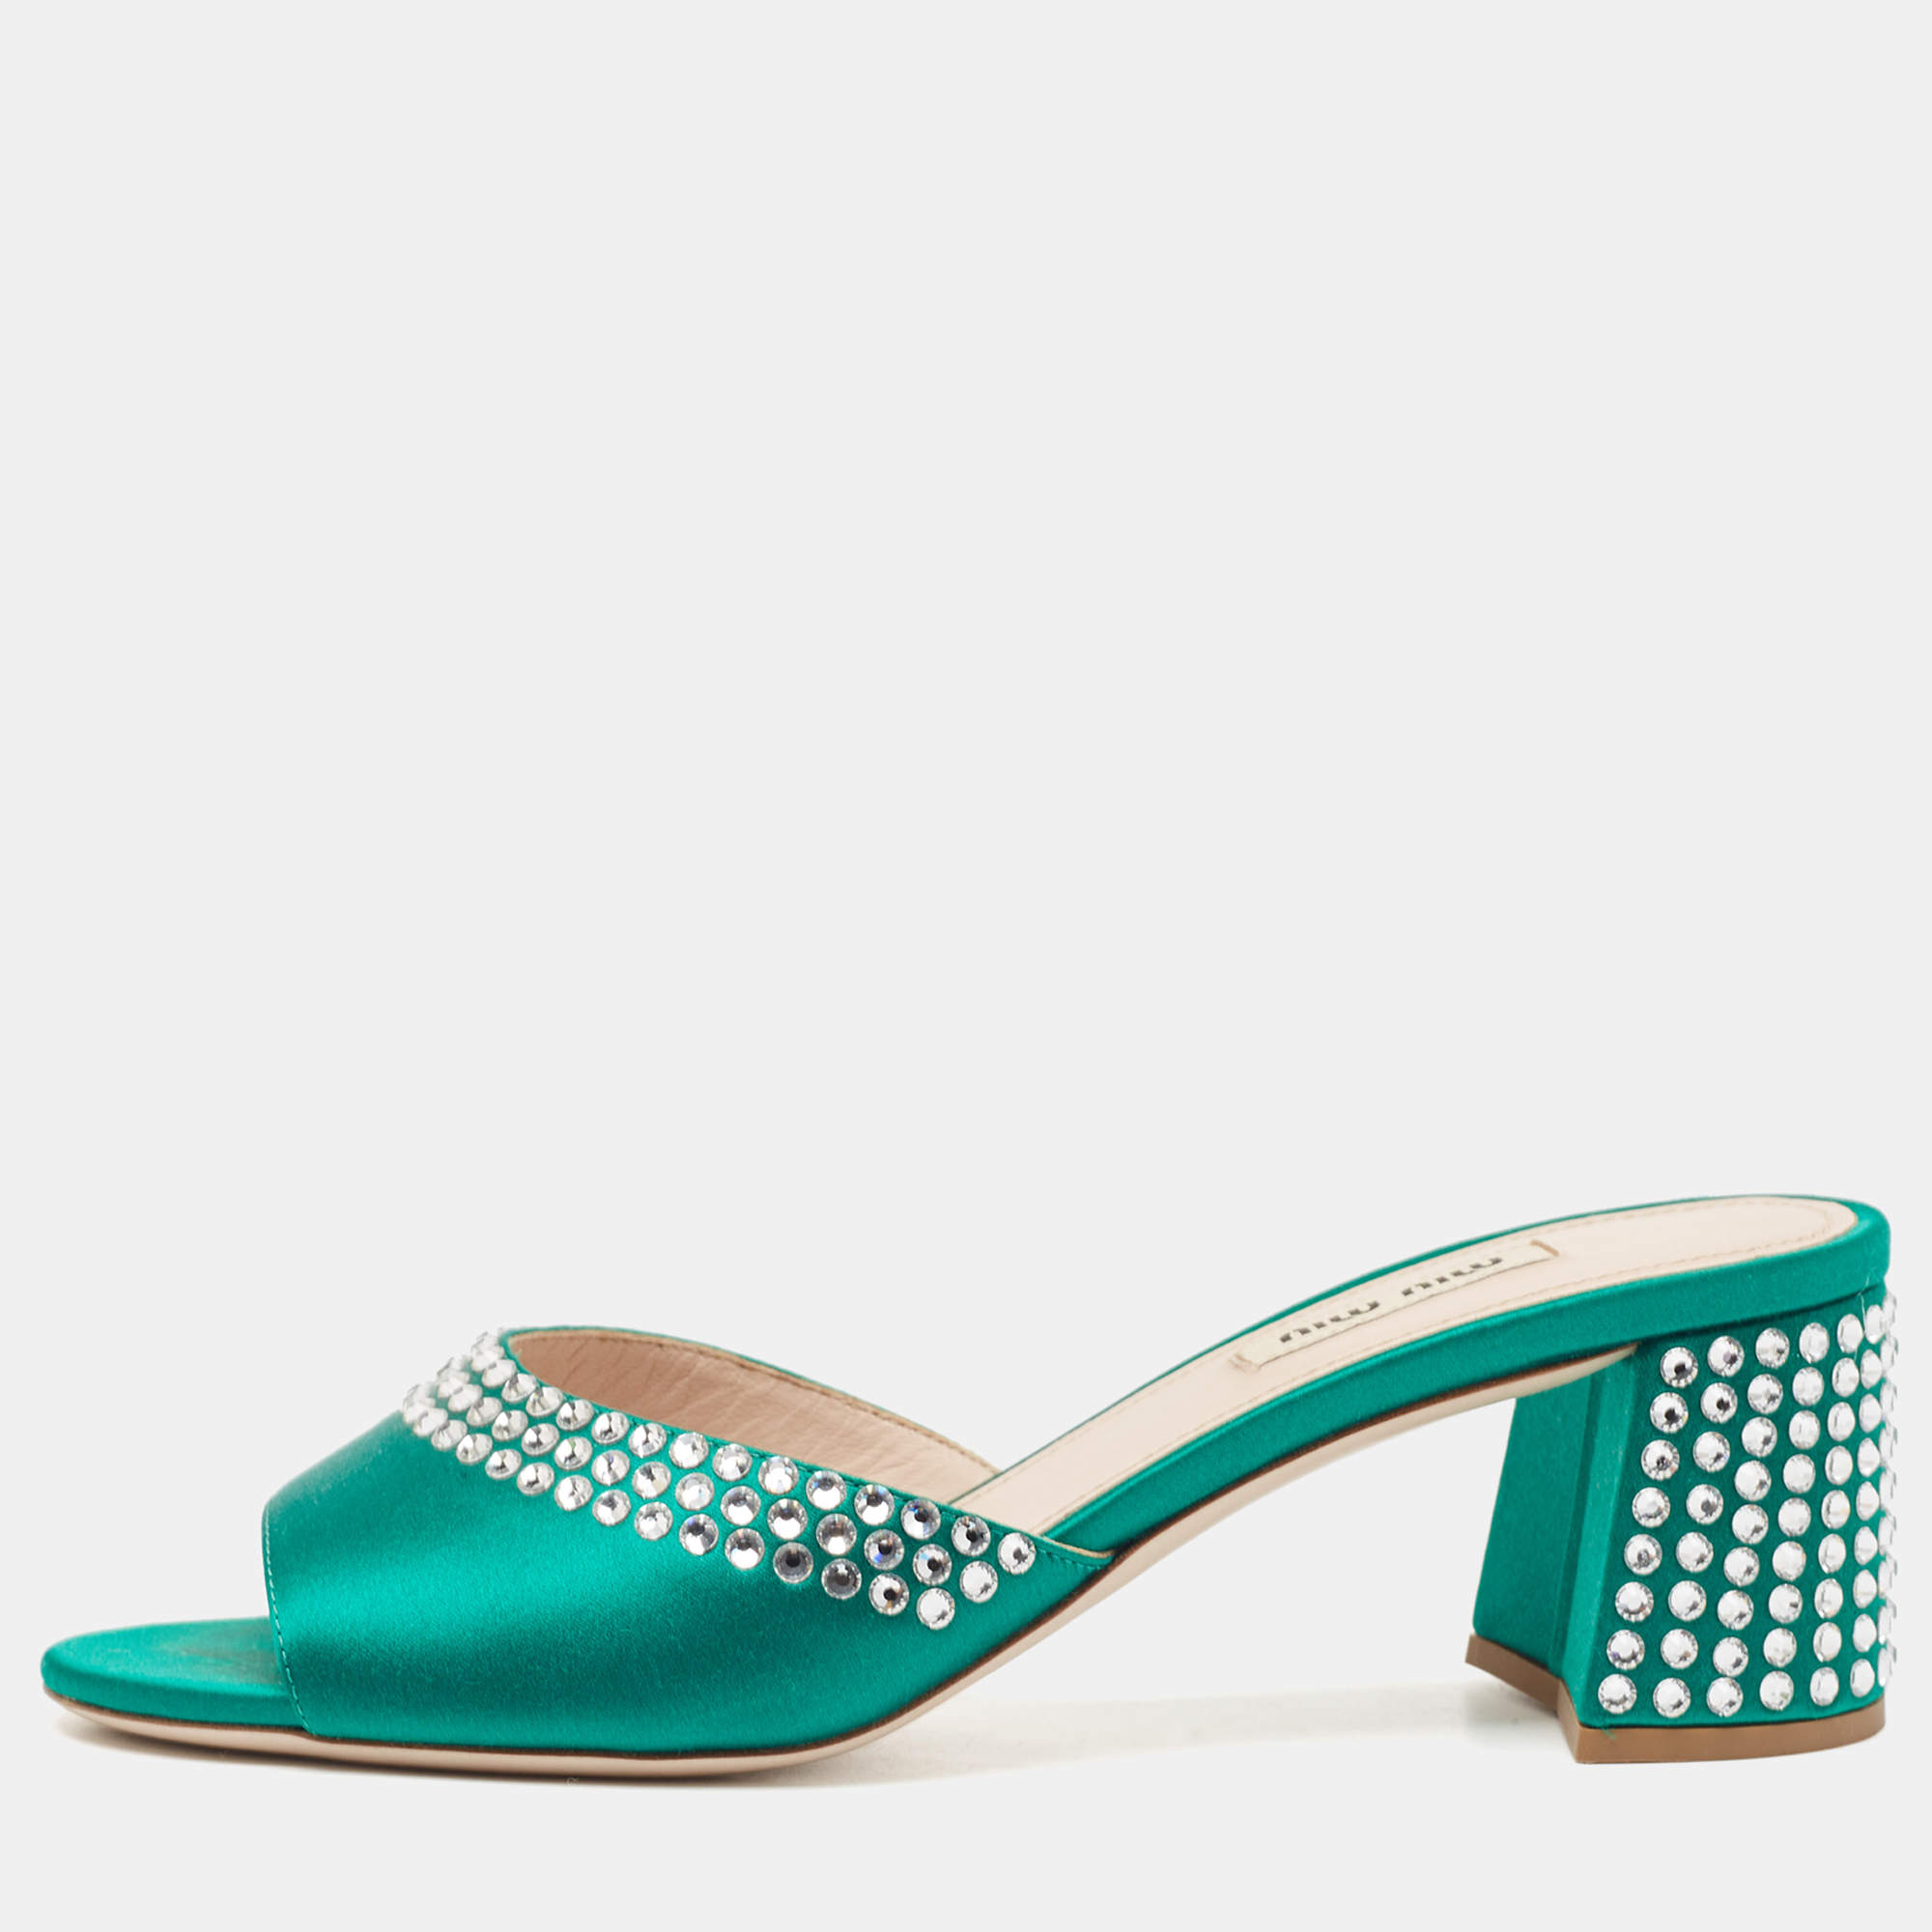 Miu Miu Green Satin Crystals Embellished Slide Sandals Size 38